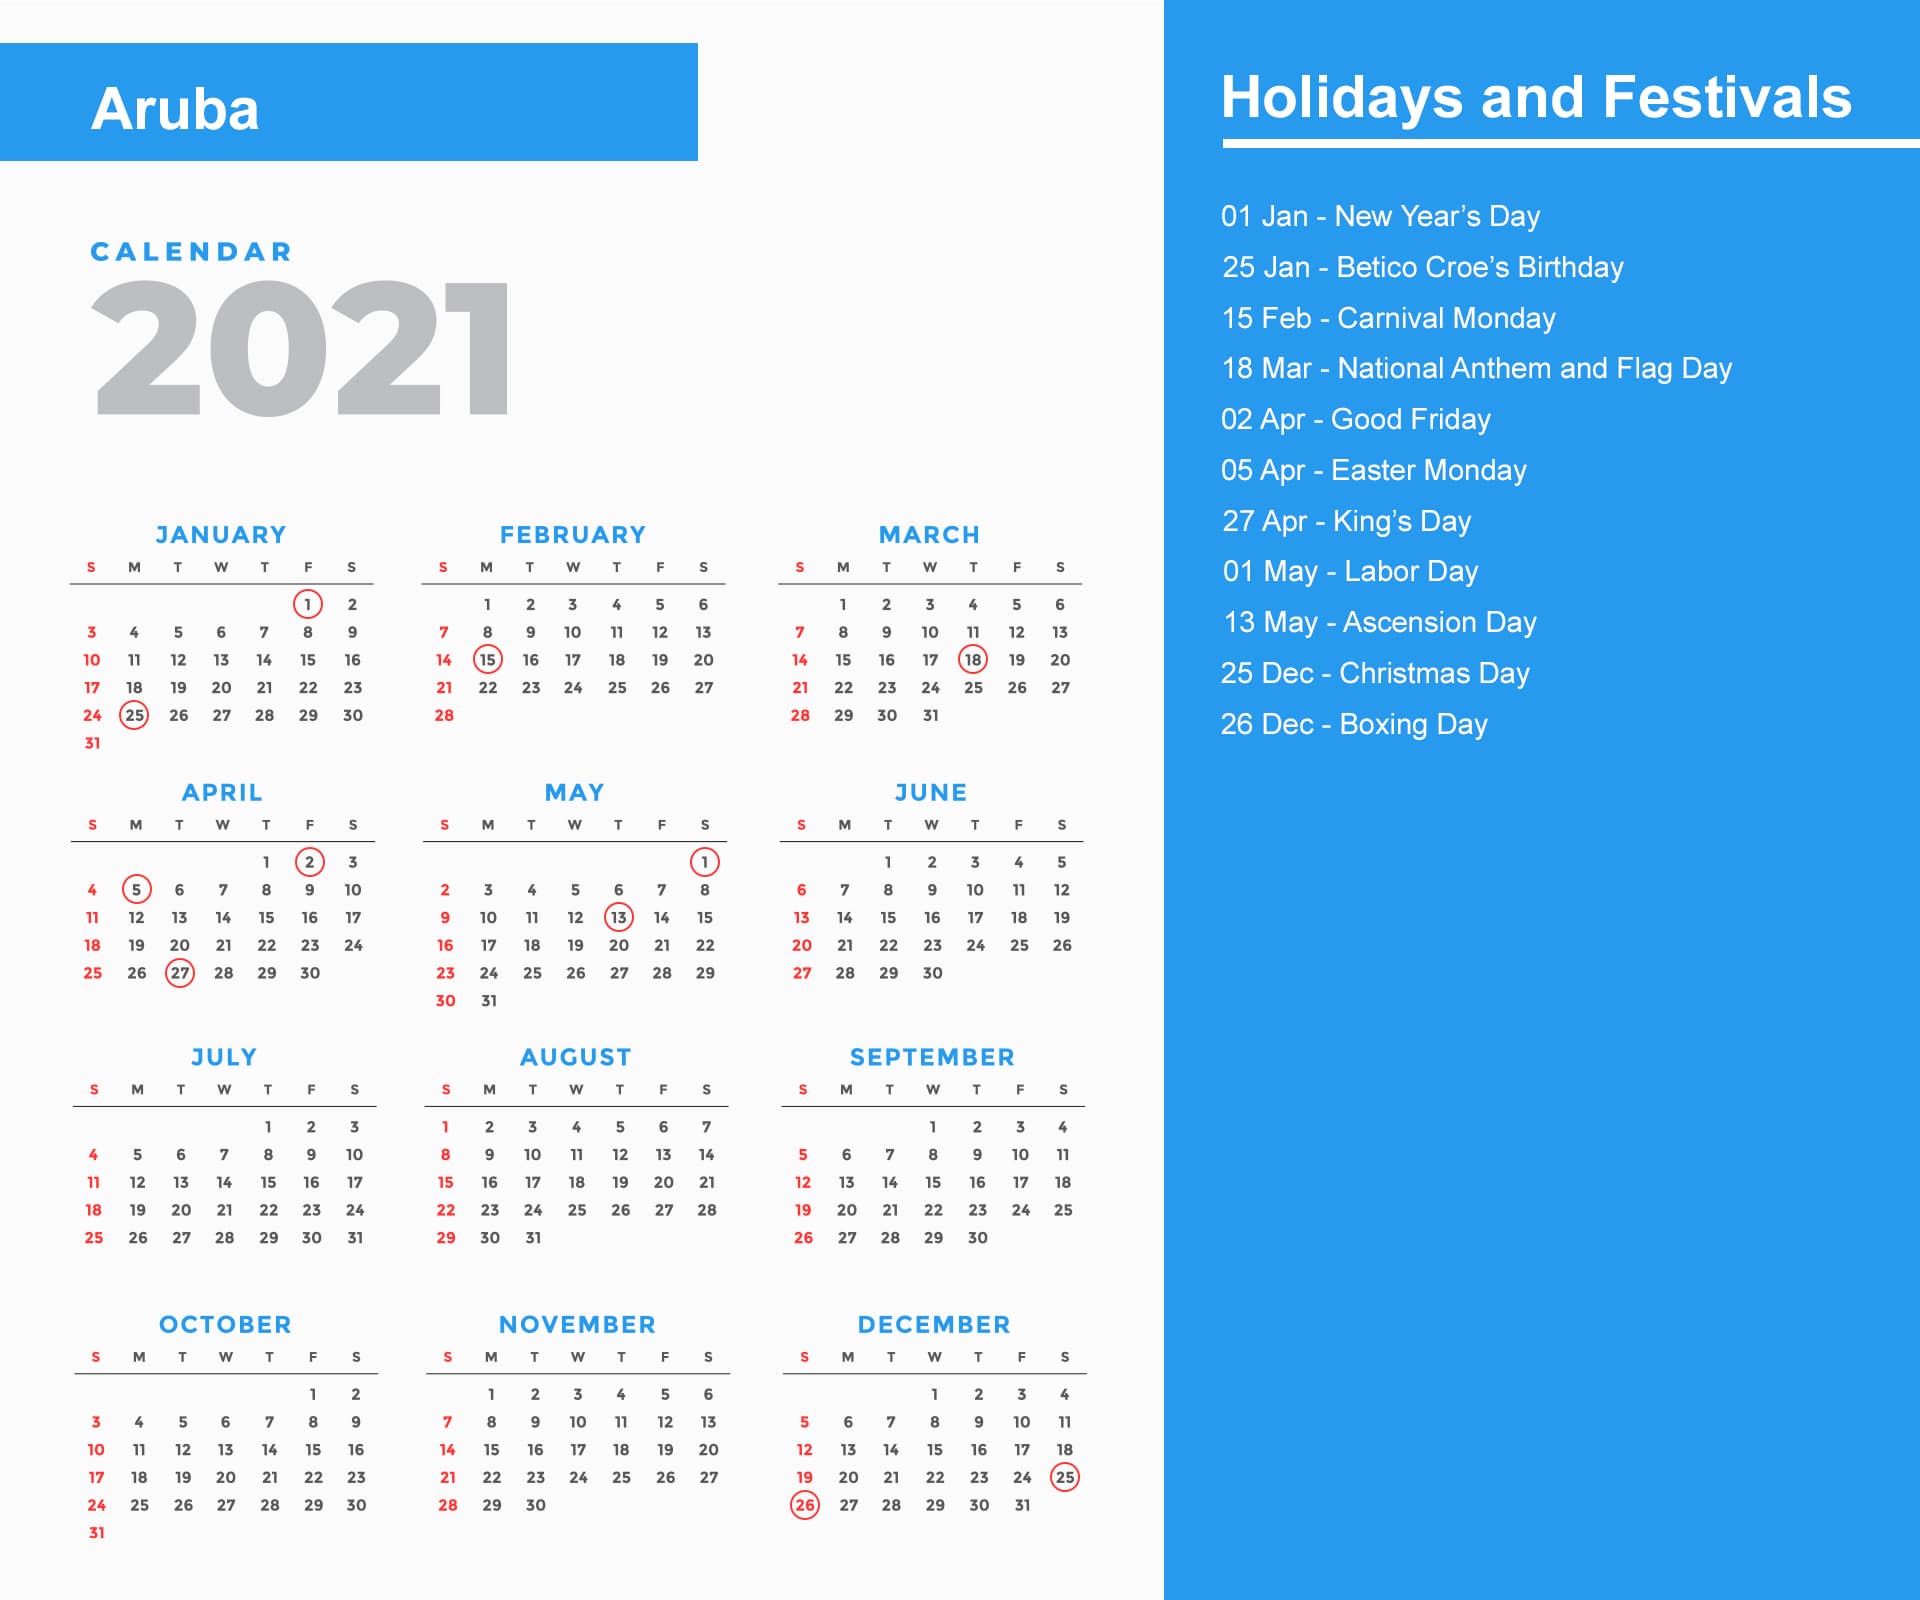 Aruba Holidays Calendar 2021